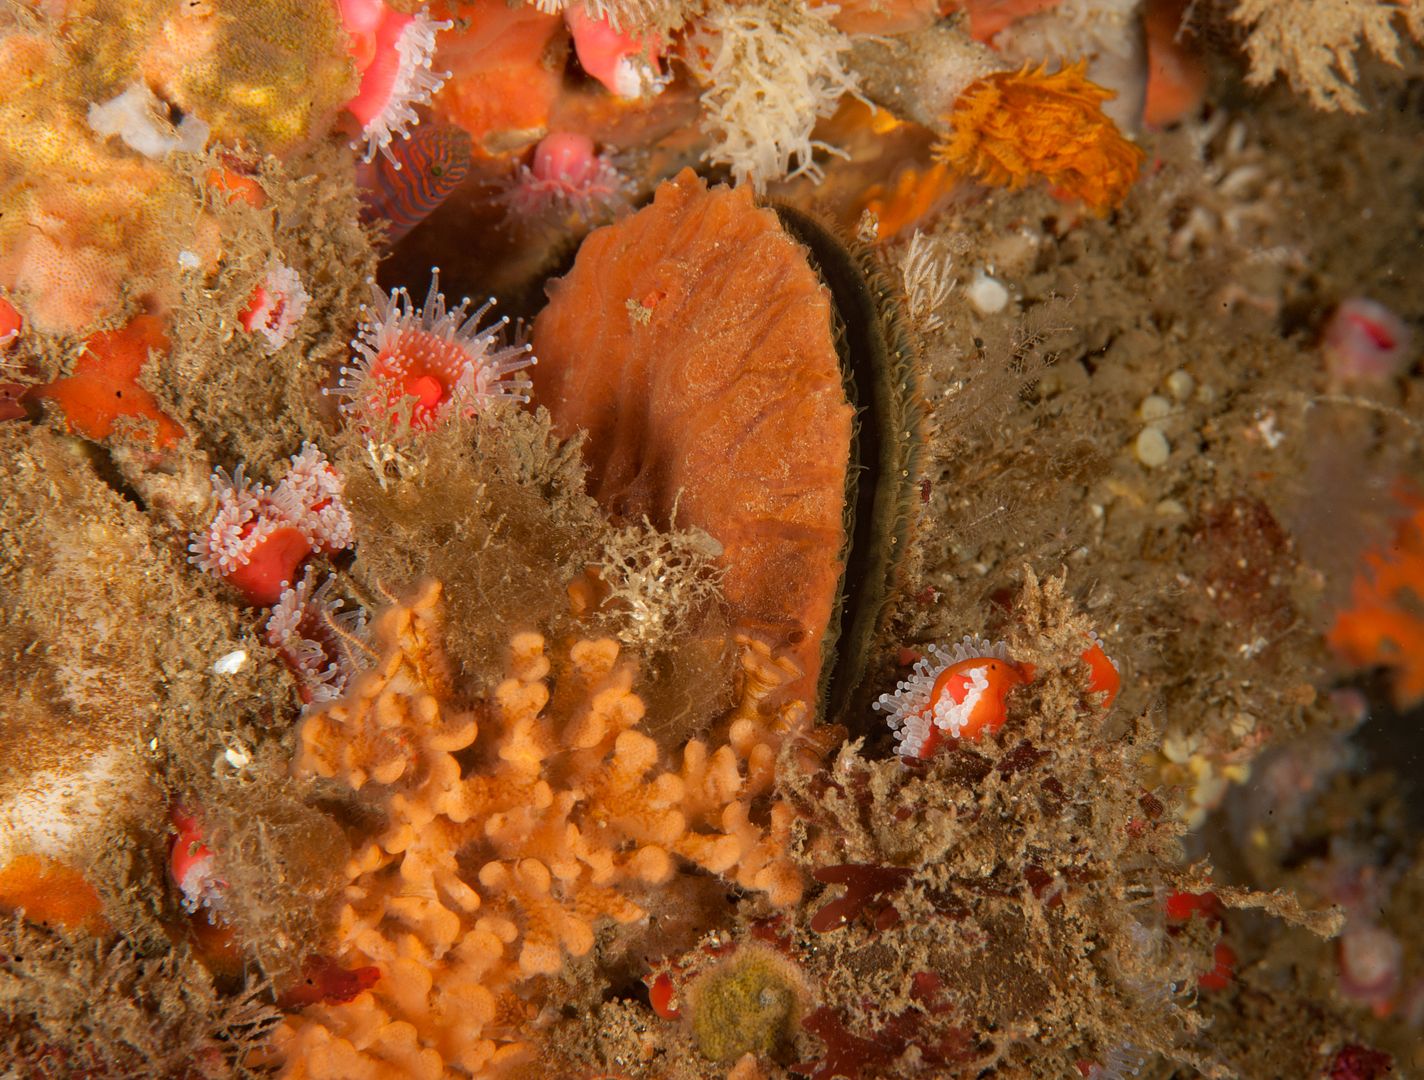 Crassadoma gigantea photo Kevins Reef 41_zpsu6zwil9w.jpg